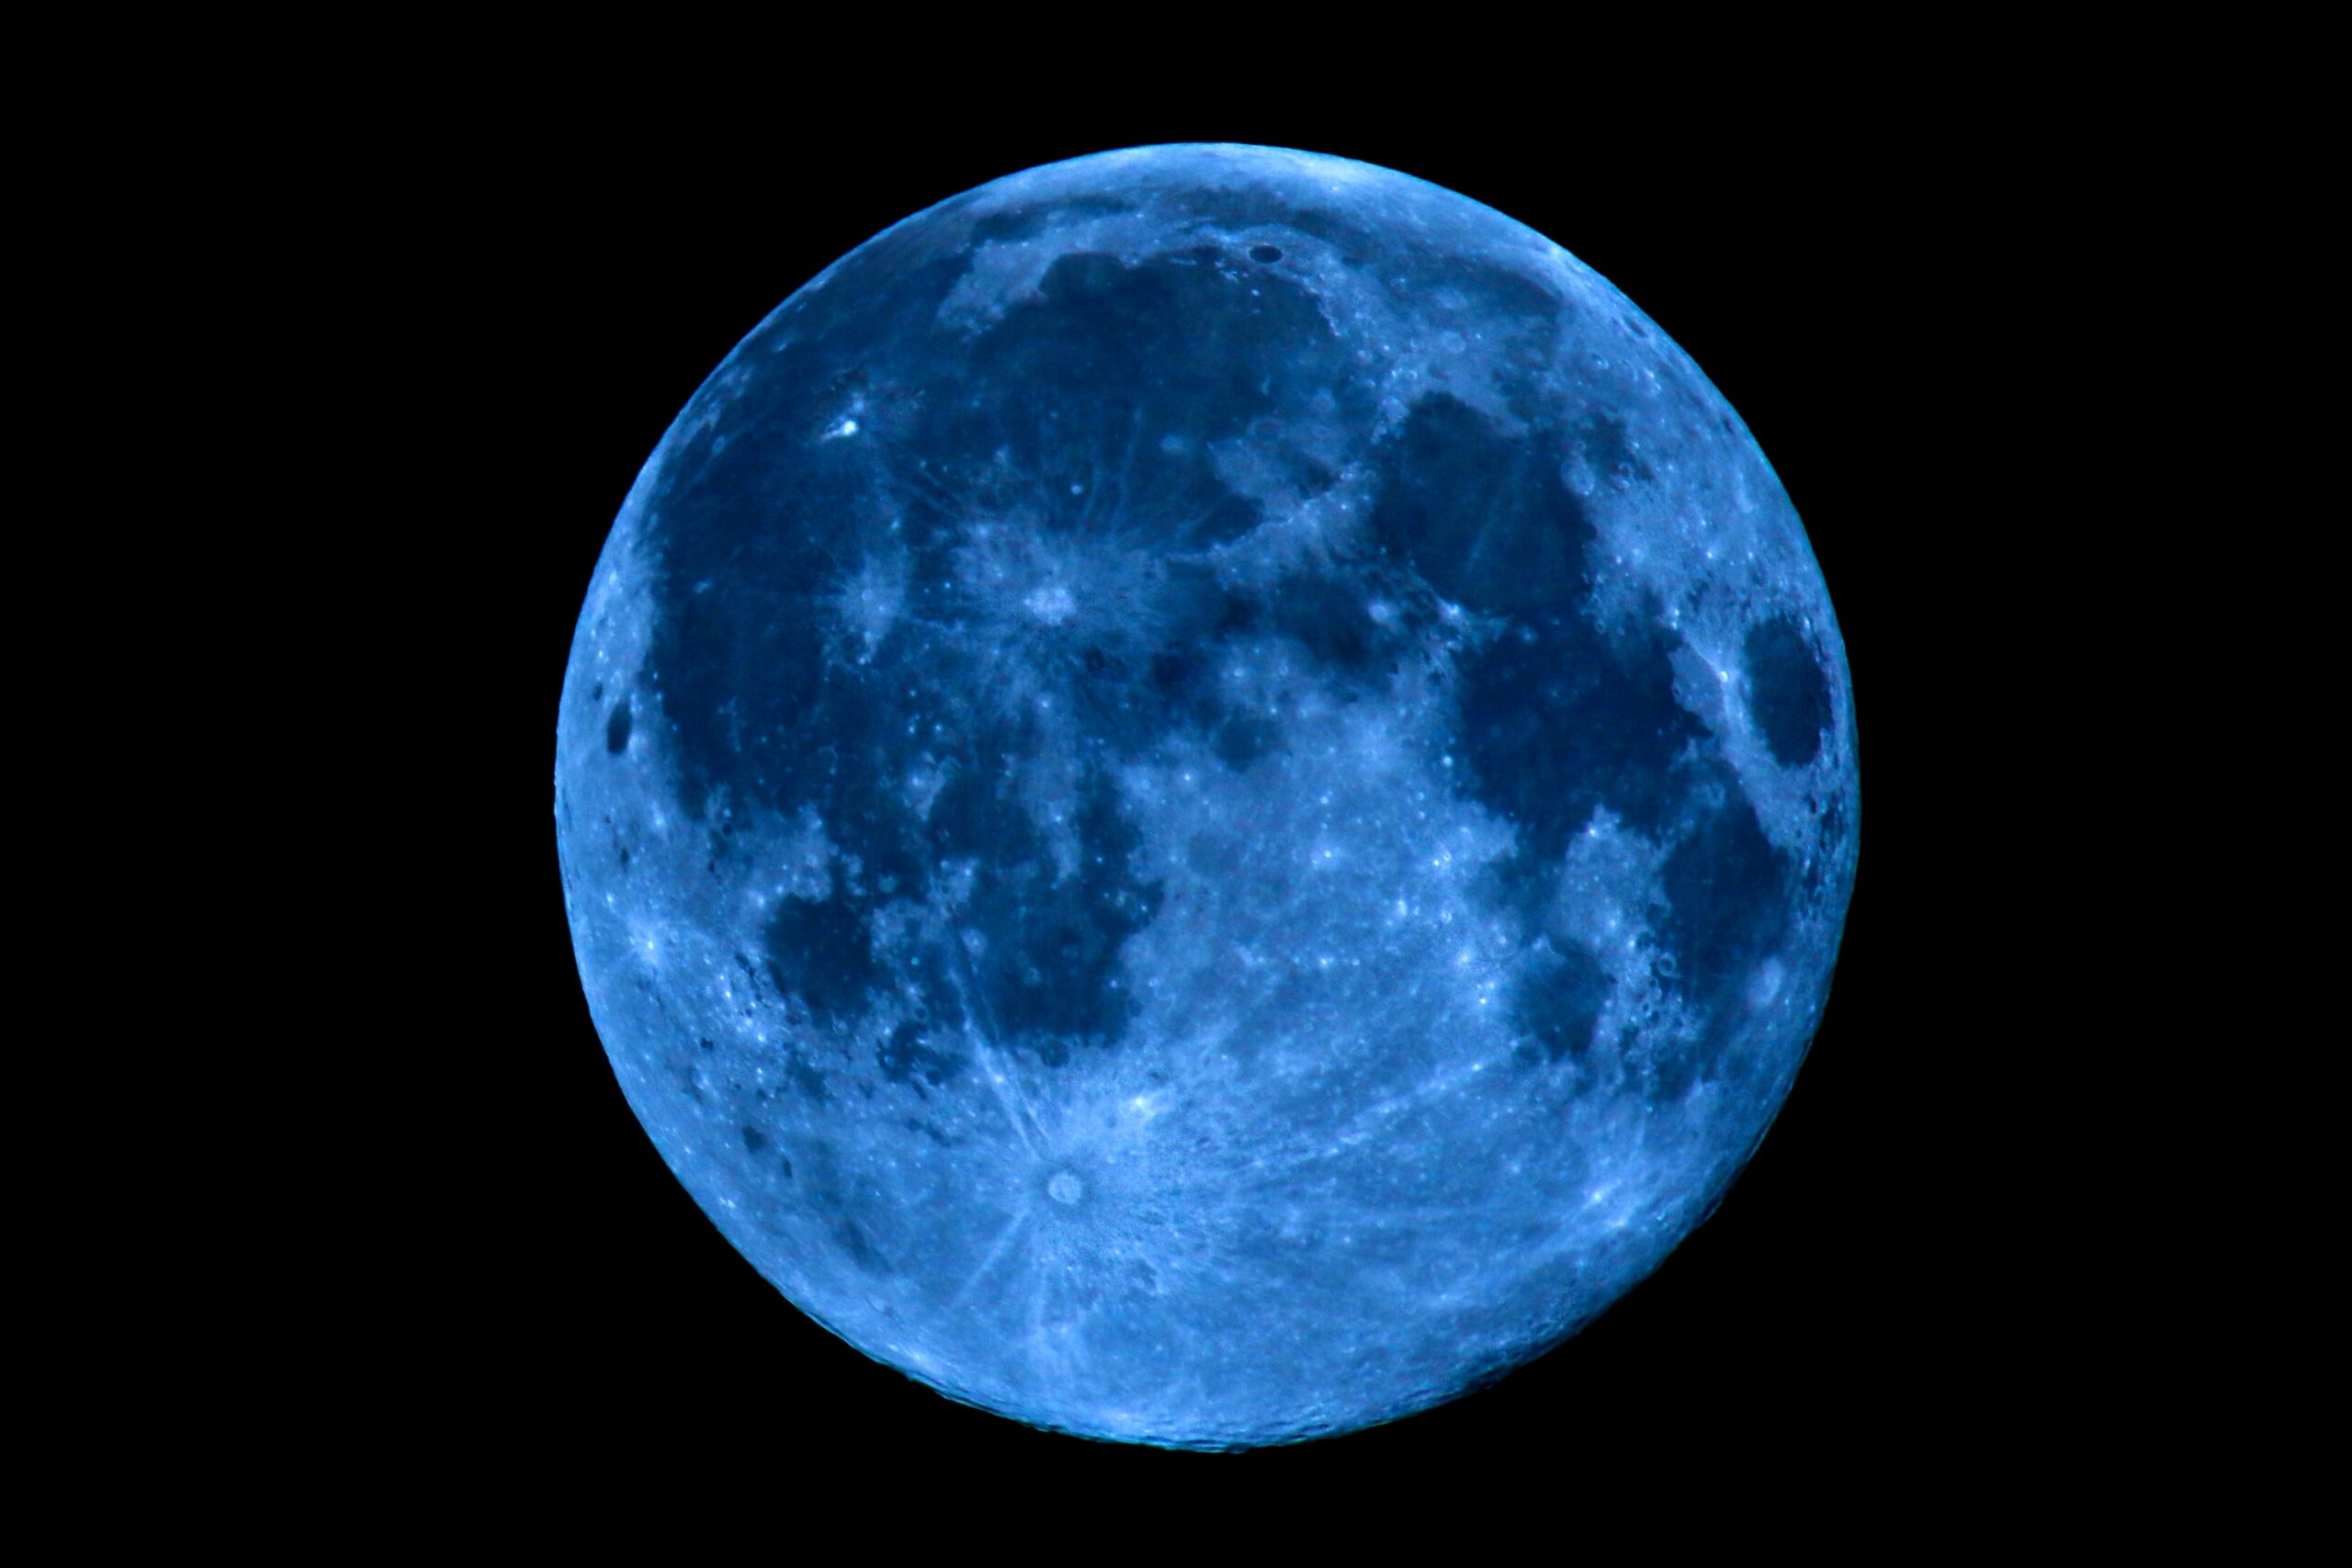 https://marigiova.gr/wp-content/uploads/2020/10/Γαλάζιο-Φεγγάρι-Μάρι-Γιόβα-scaled.jpg